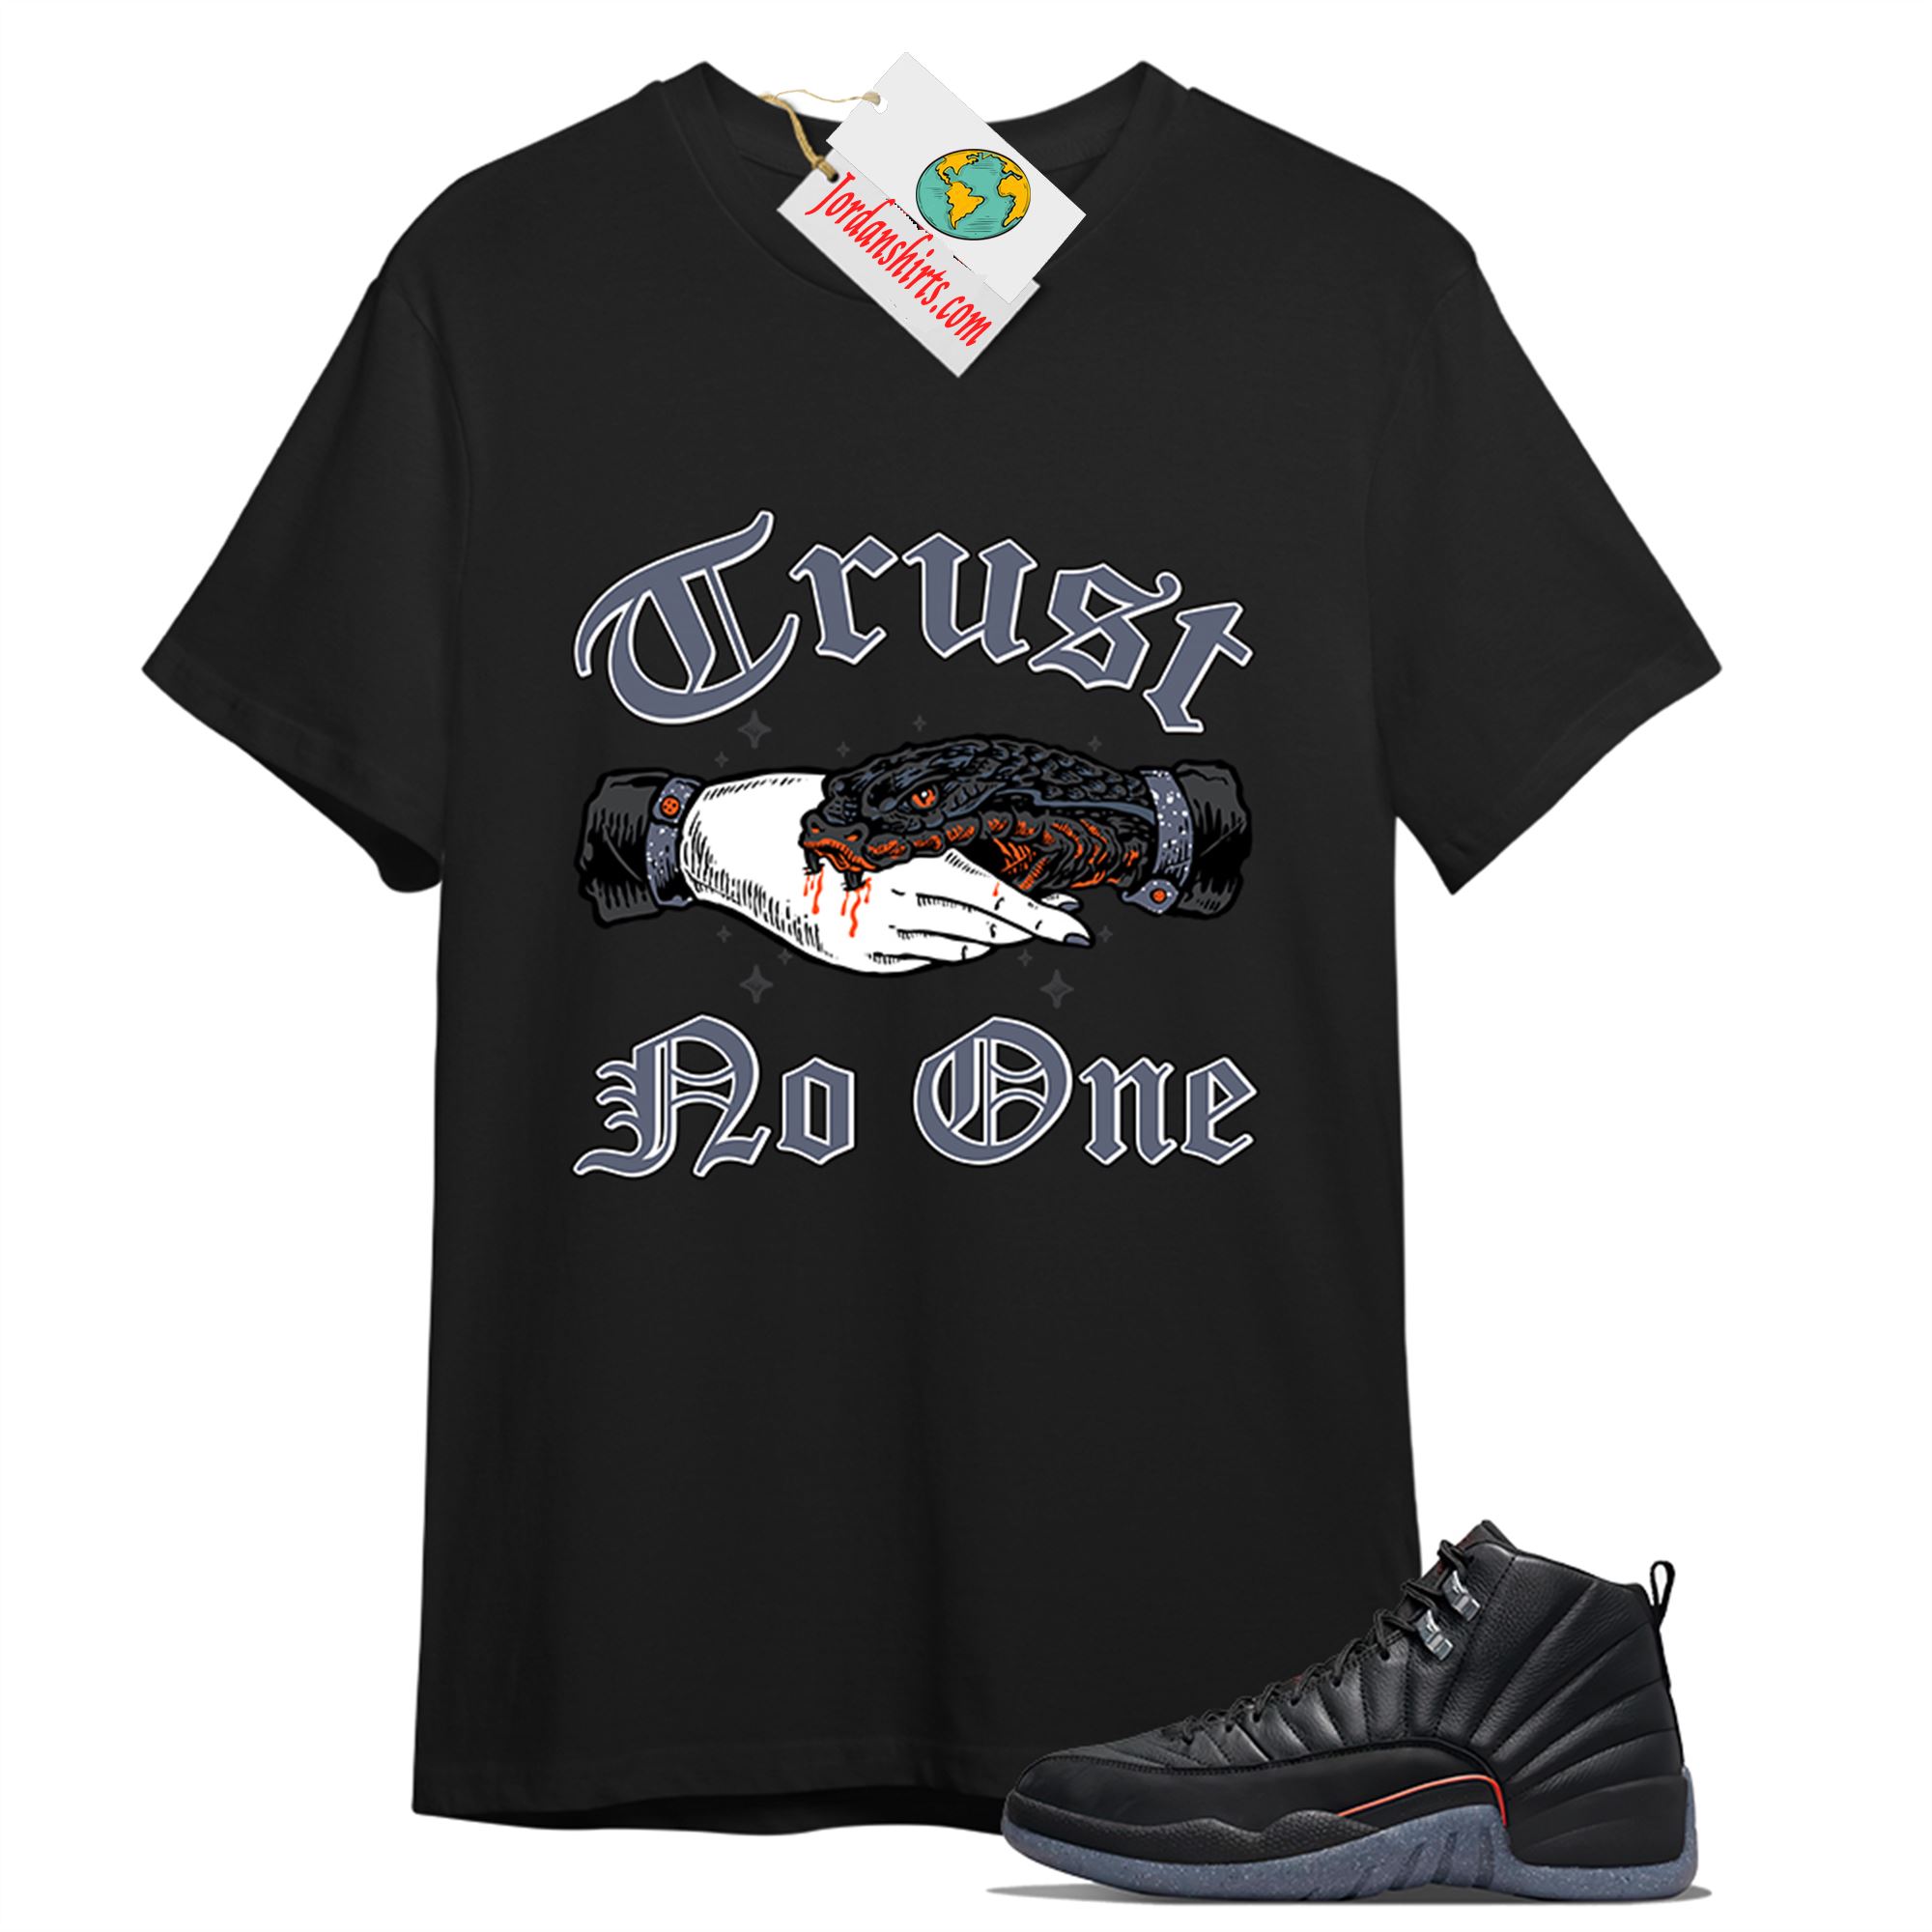 Jordan 12 Shirt, Trust No One Deal With Snake Black T-shirt Air Jordan 12 Utility Grind 12s Plus Size Up To 5xl